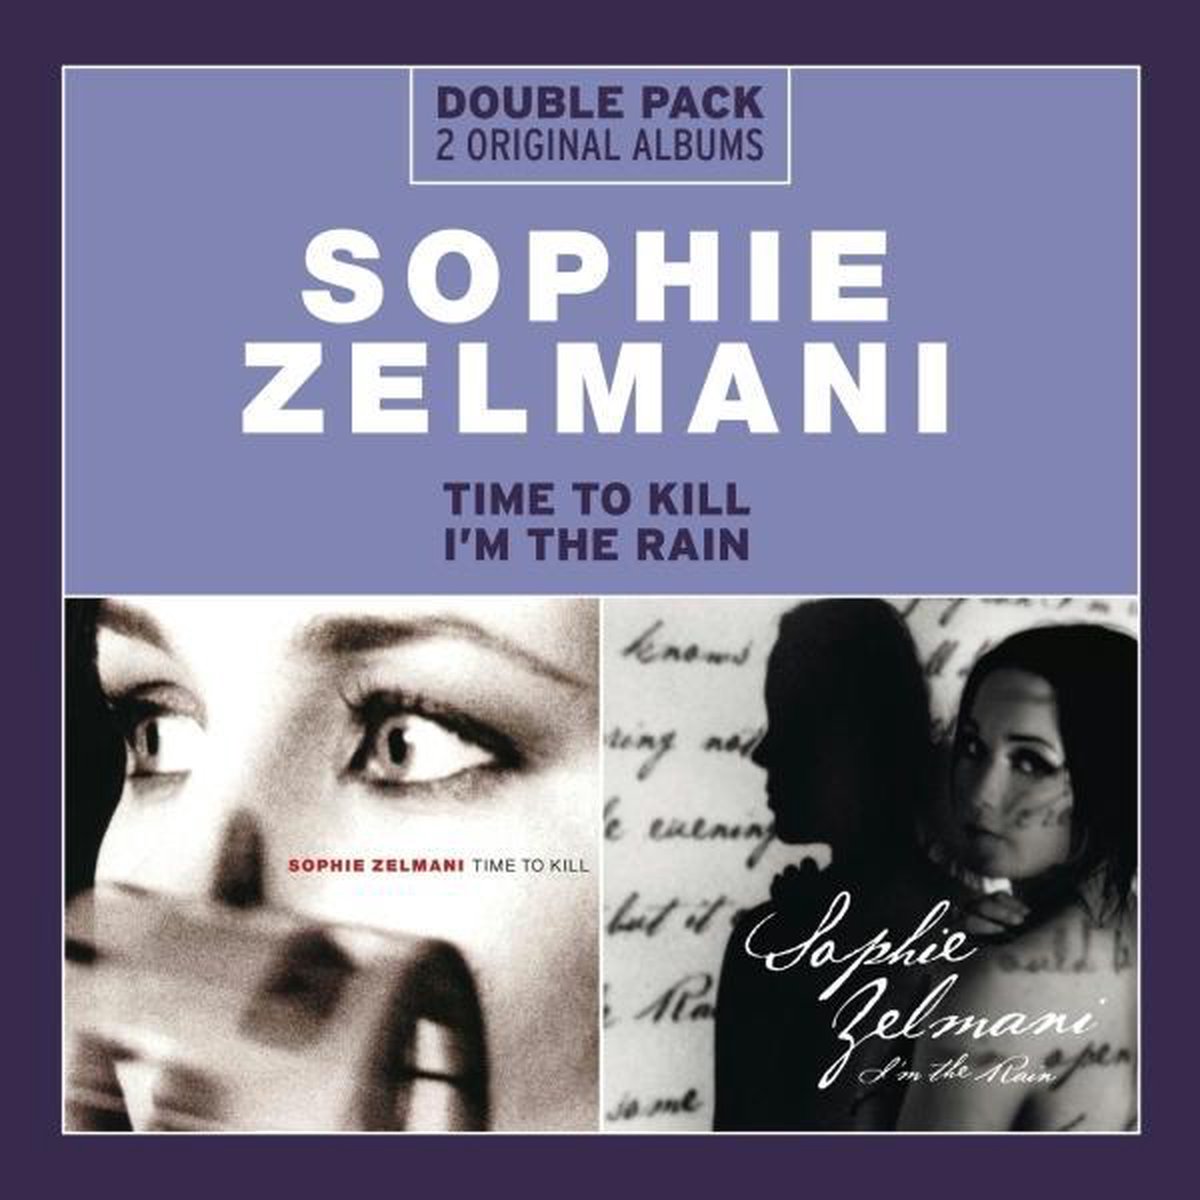 Time To Kill/I'm the Rain - Sophie Zelmani